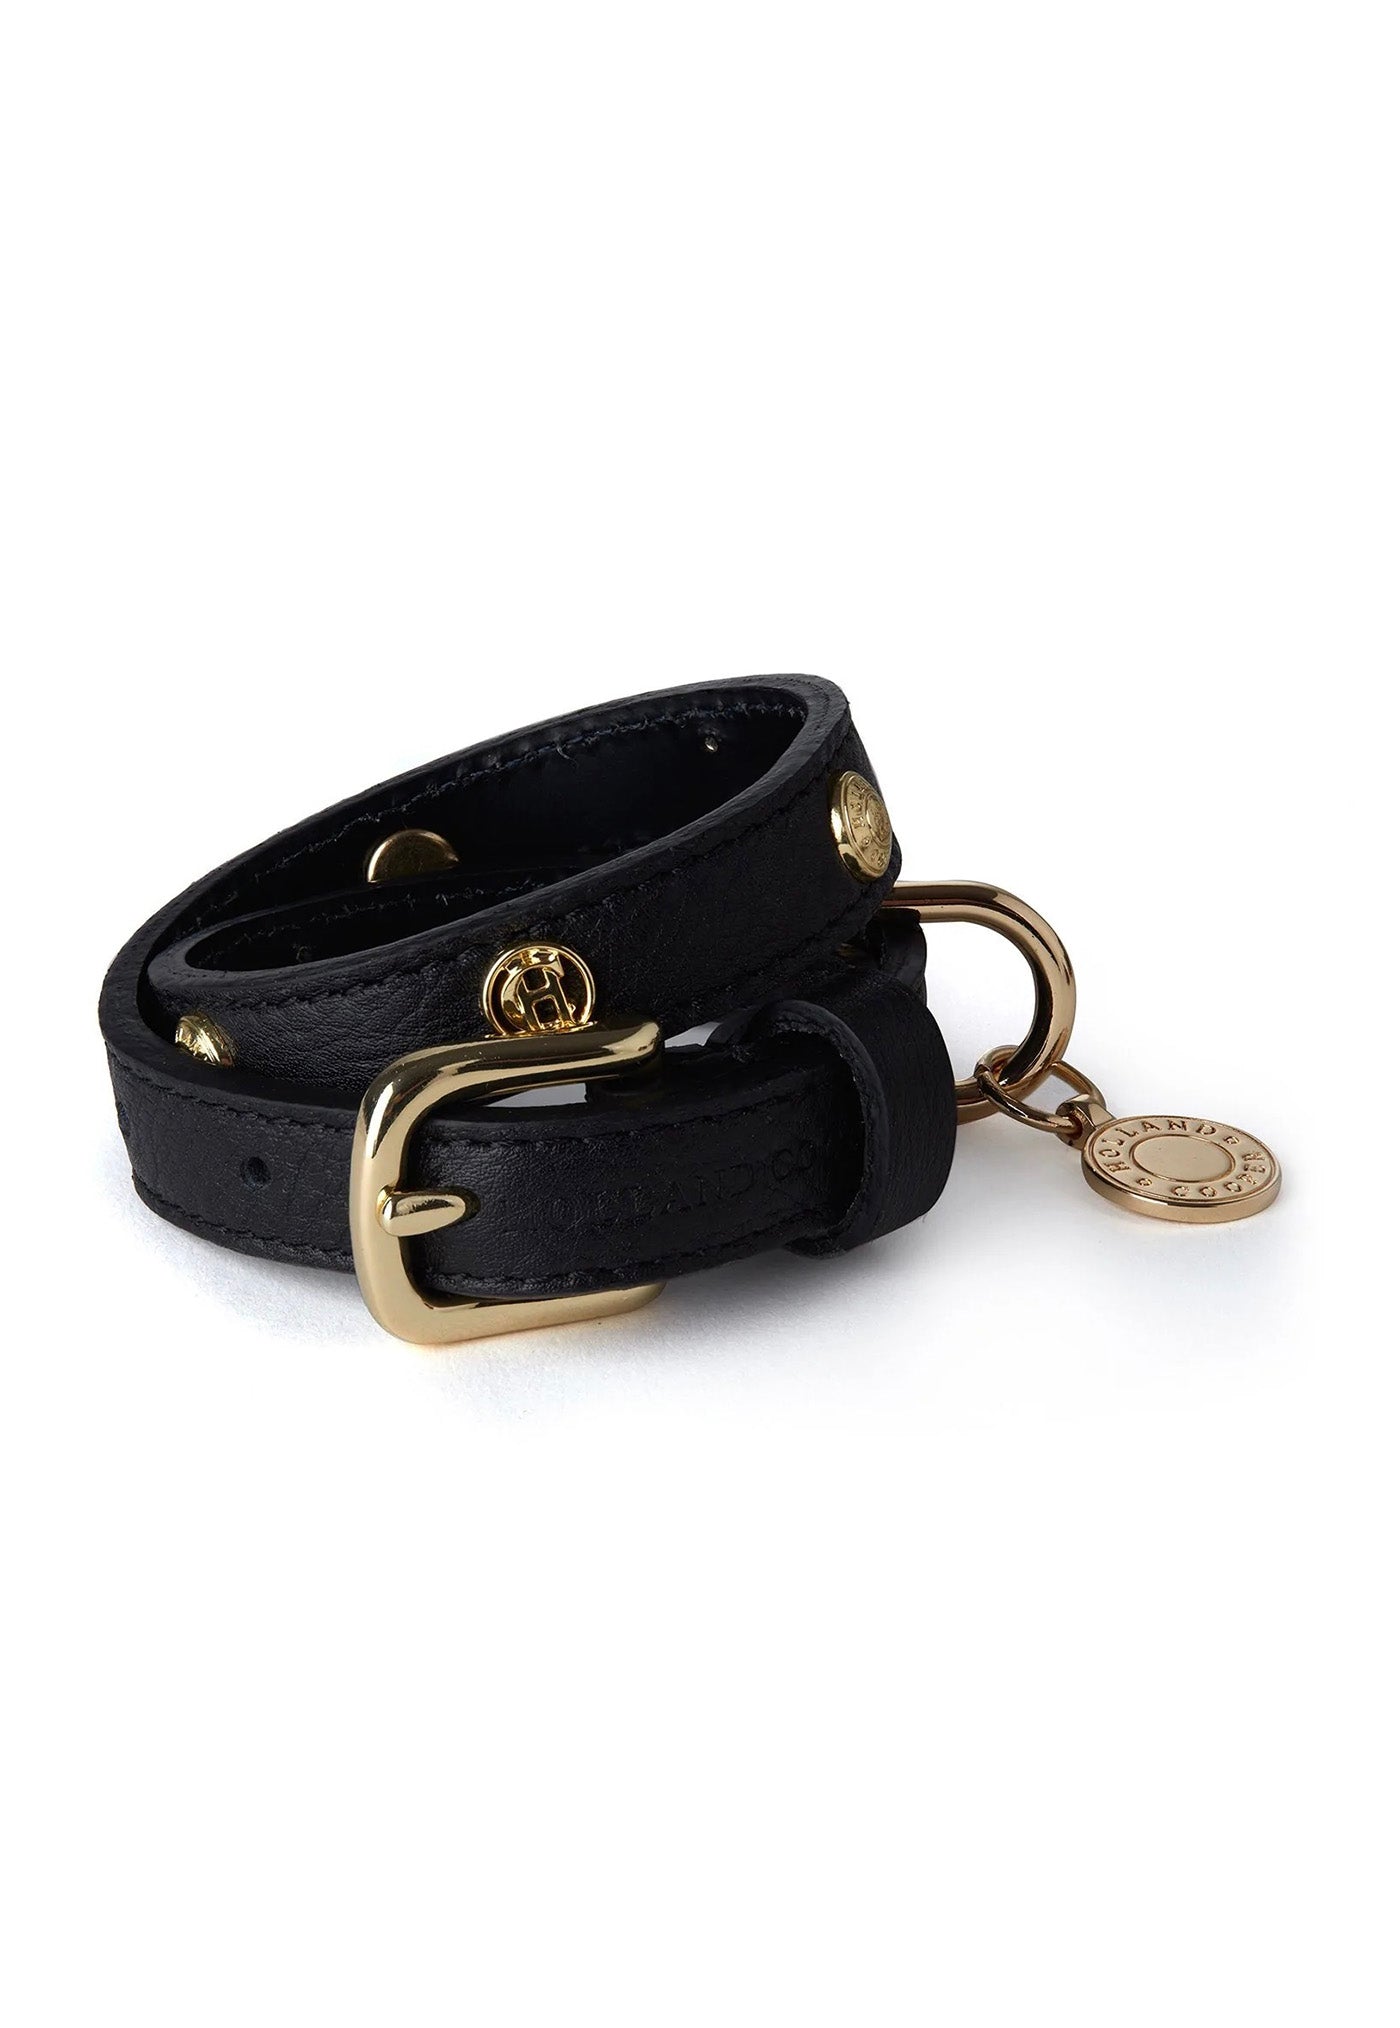 HC Studded Dog Collar - Black sold by Angel Divine